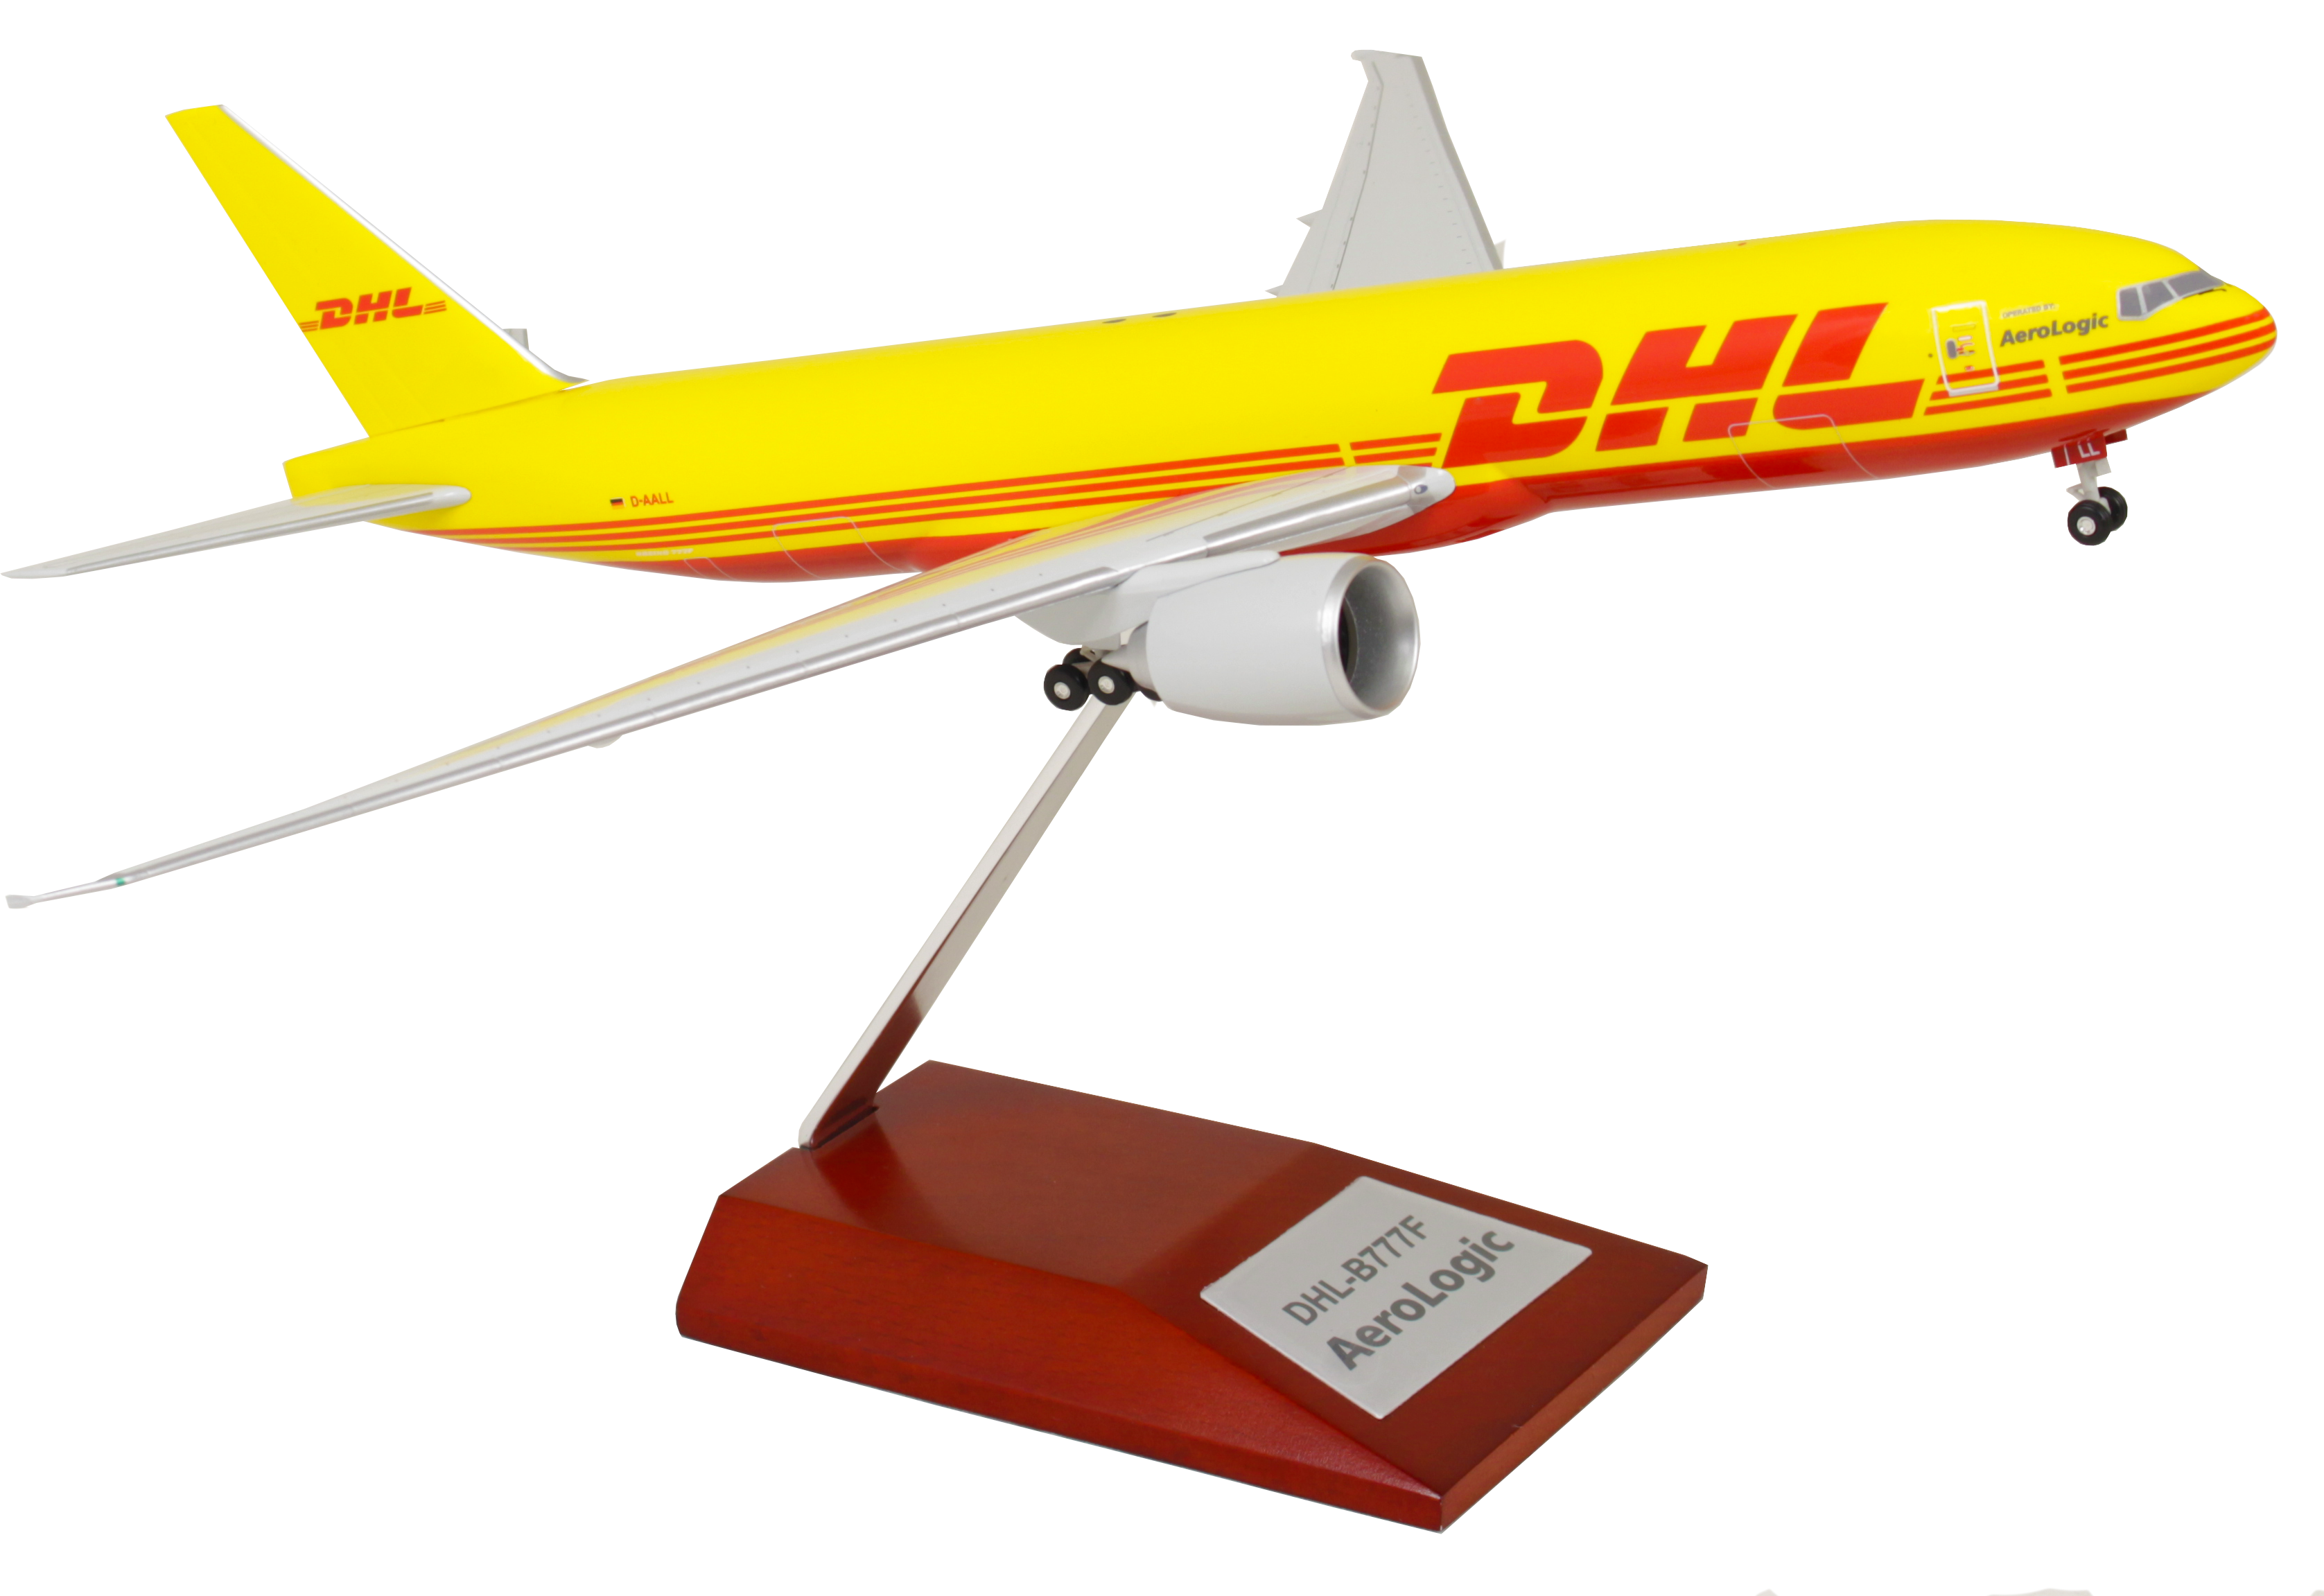 :: Limox DHL - 1:200 ScaleModelStore.com Boeing LW200DHL001 777-200F - (AeroLogic)